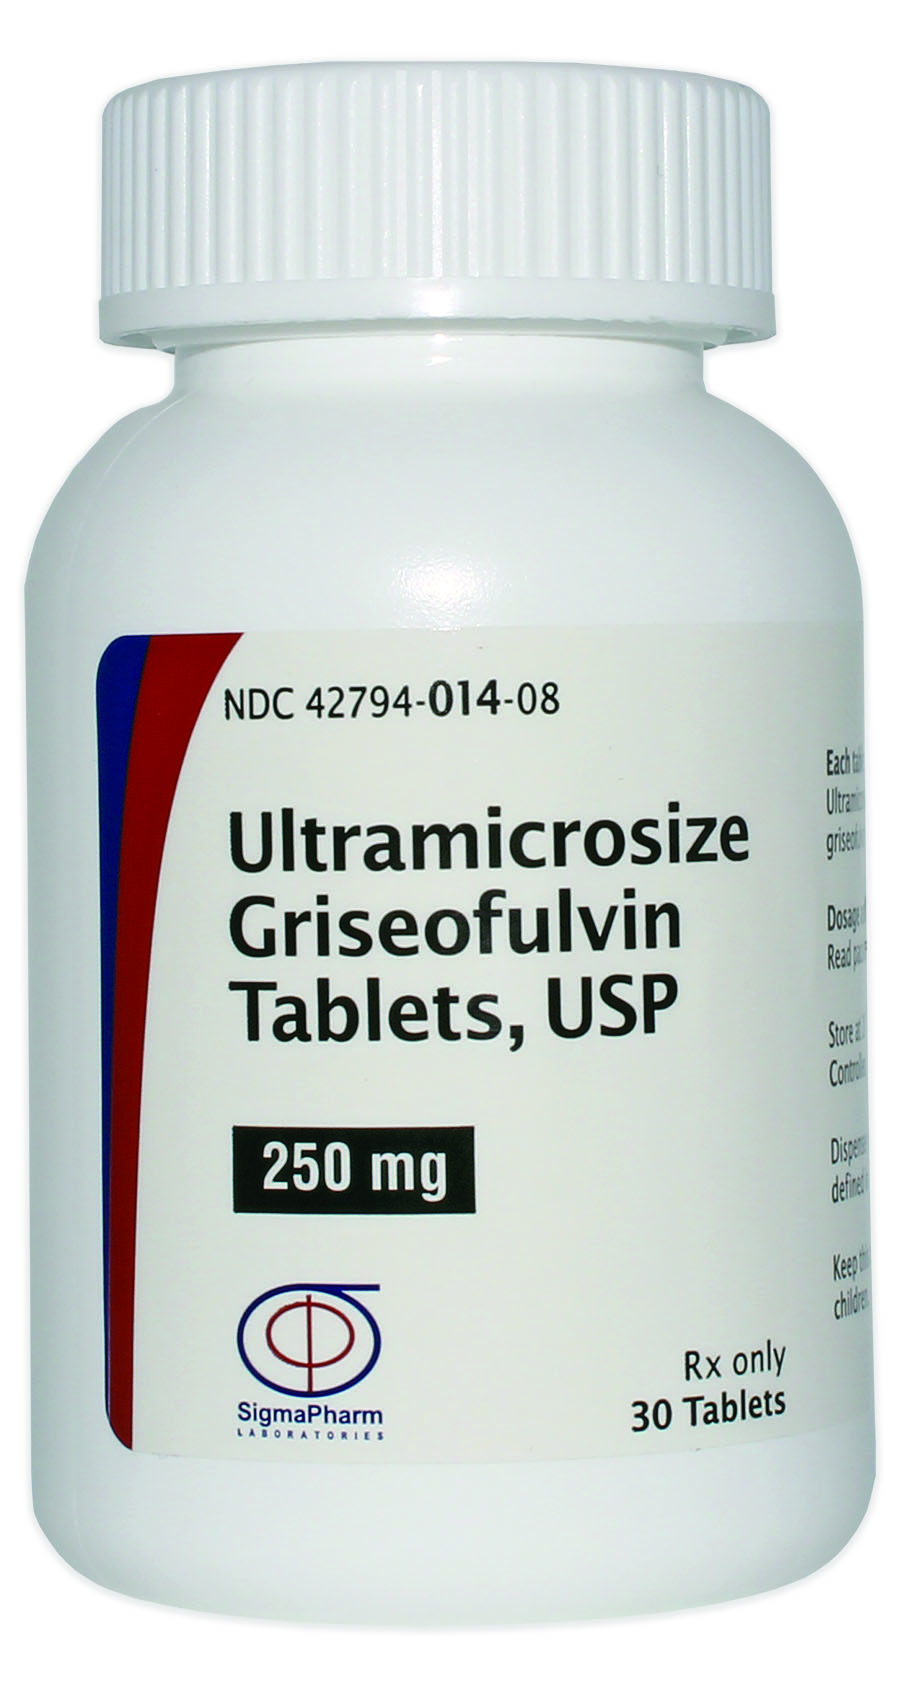 Ultramicrosize Griseofulvin Tablets, USP 250 mg